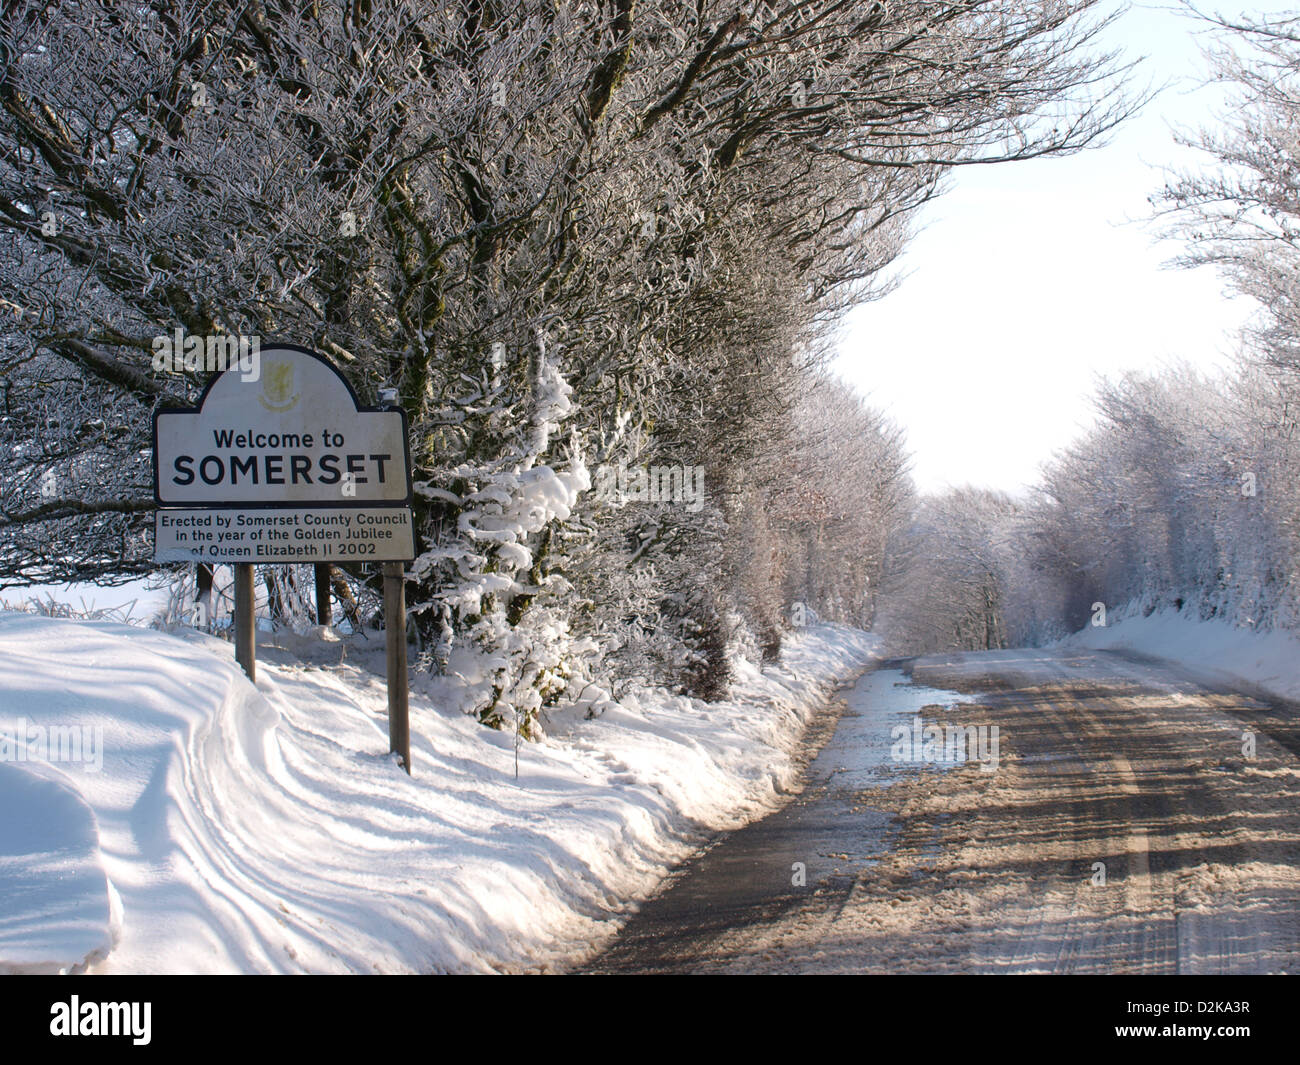 Welcome to Somerset road sign, Exmoor, UK January 2013 Stock Photo